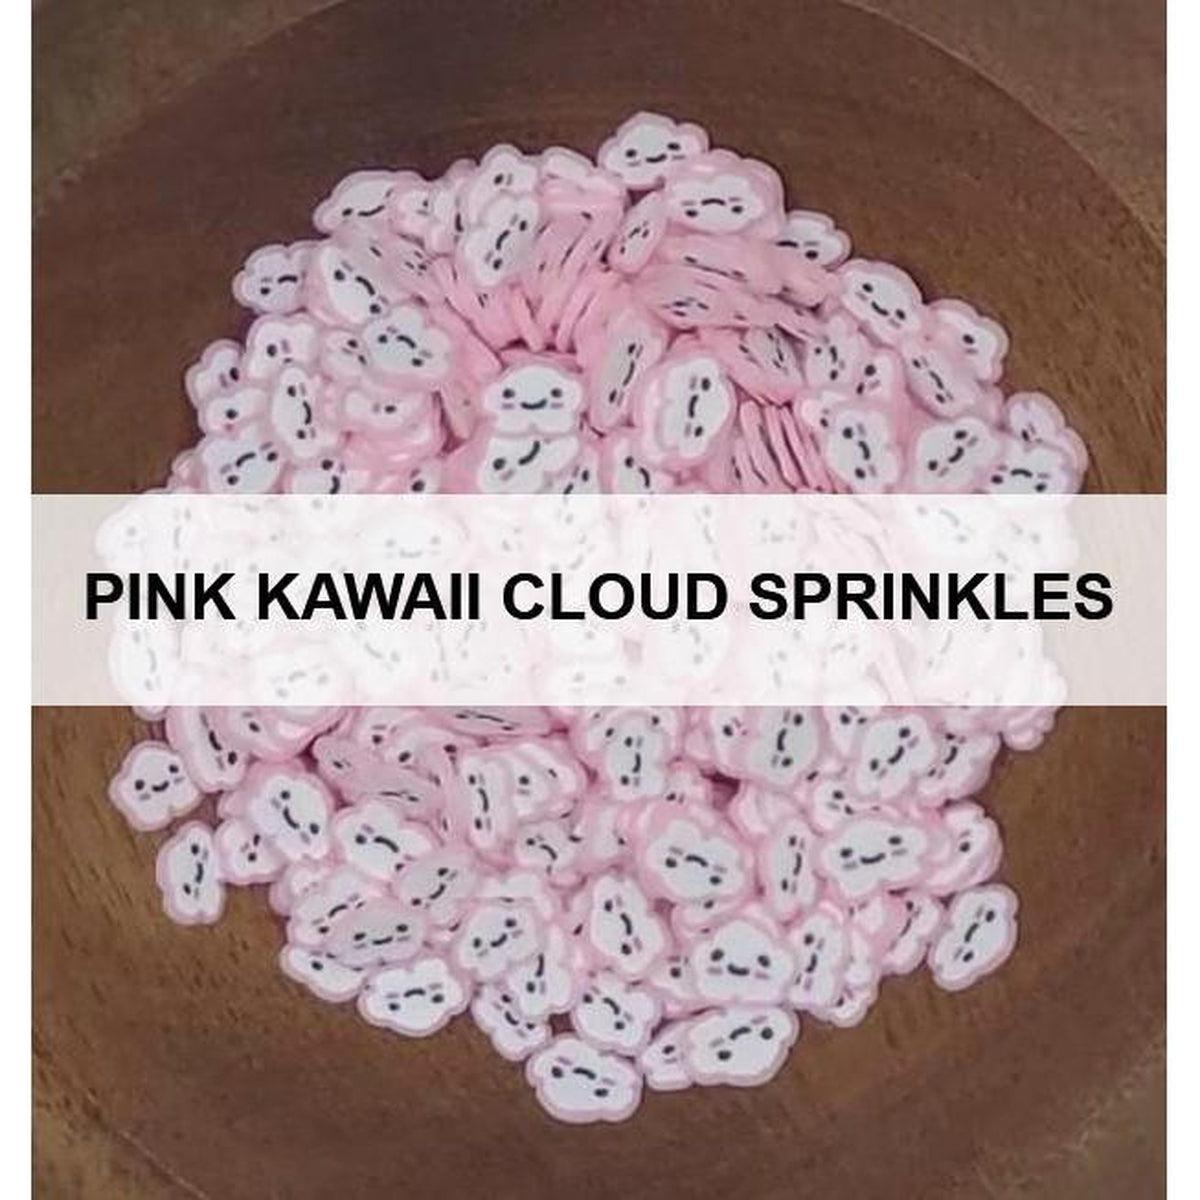 Pink Kawaii Cloud Sprinkles by Kat Scrappiness - Kat Scrappiness